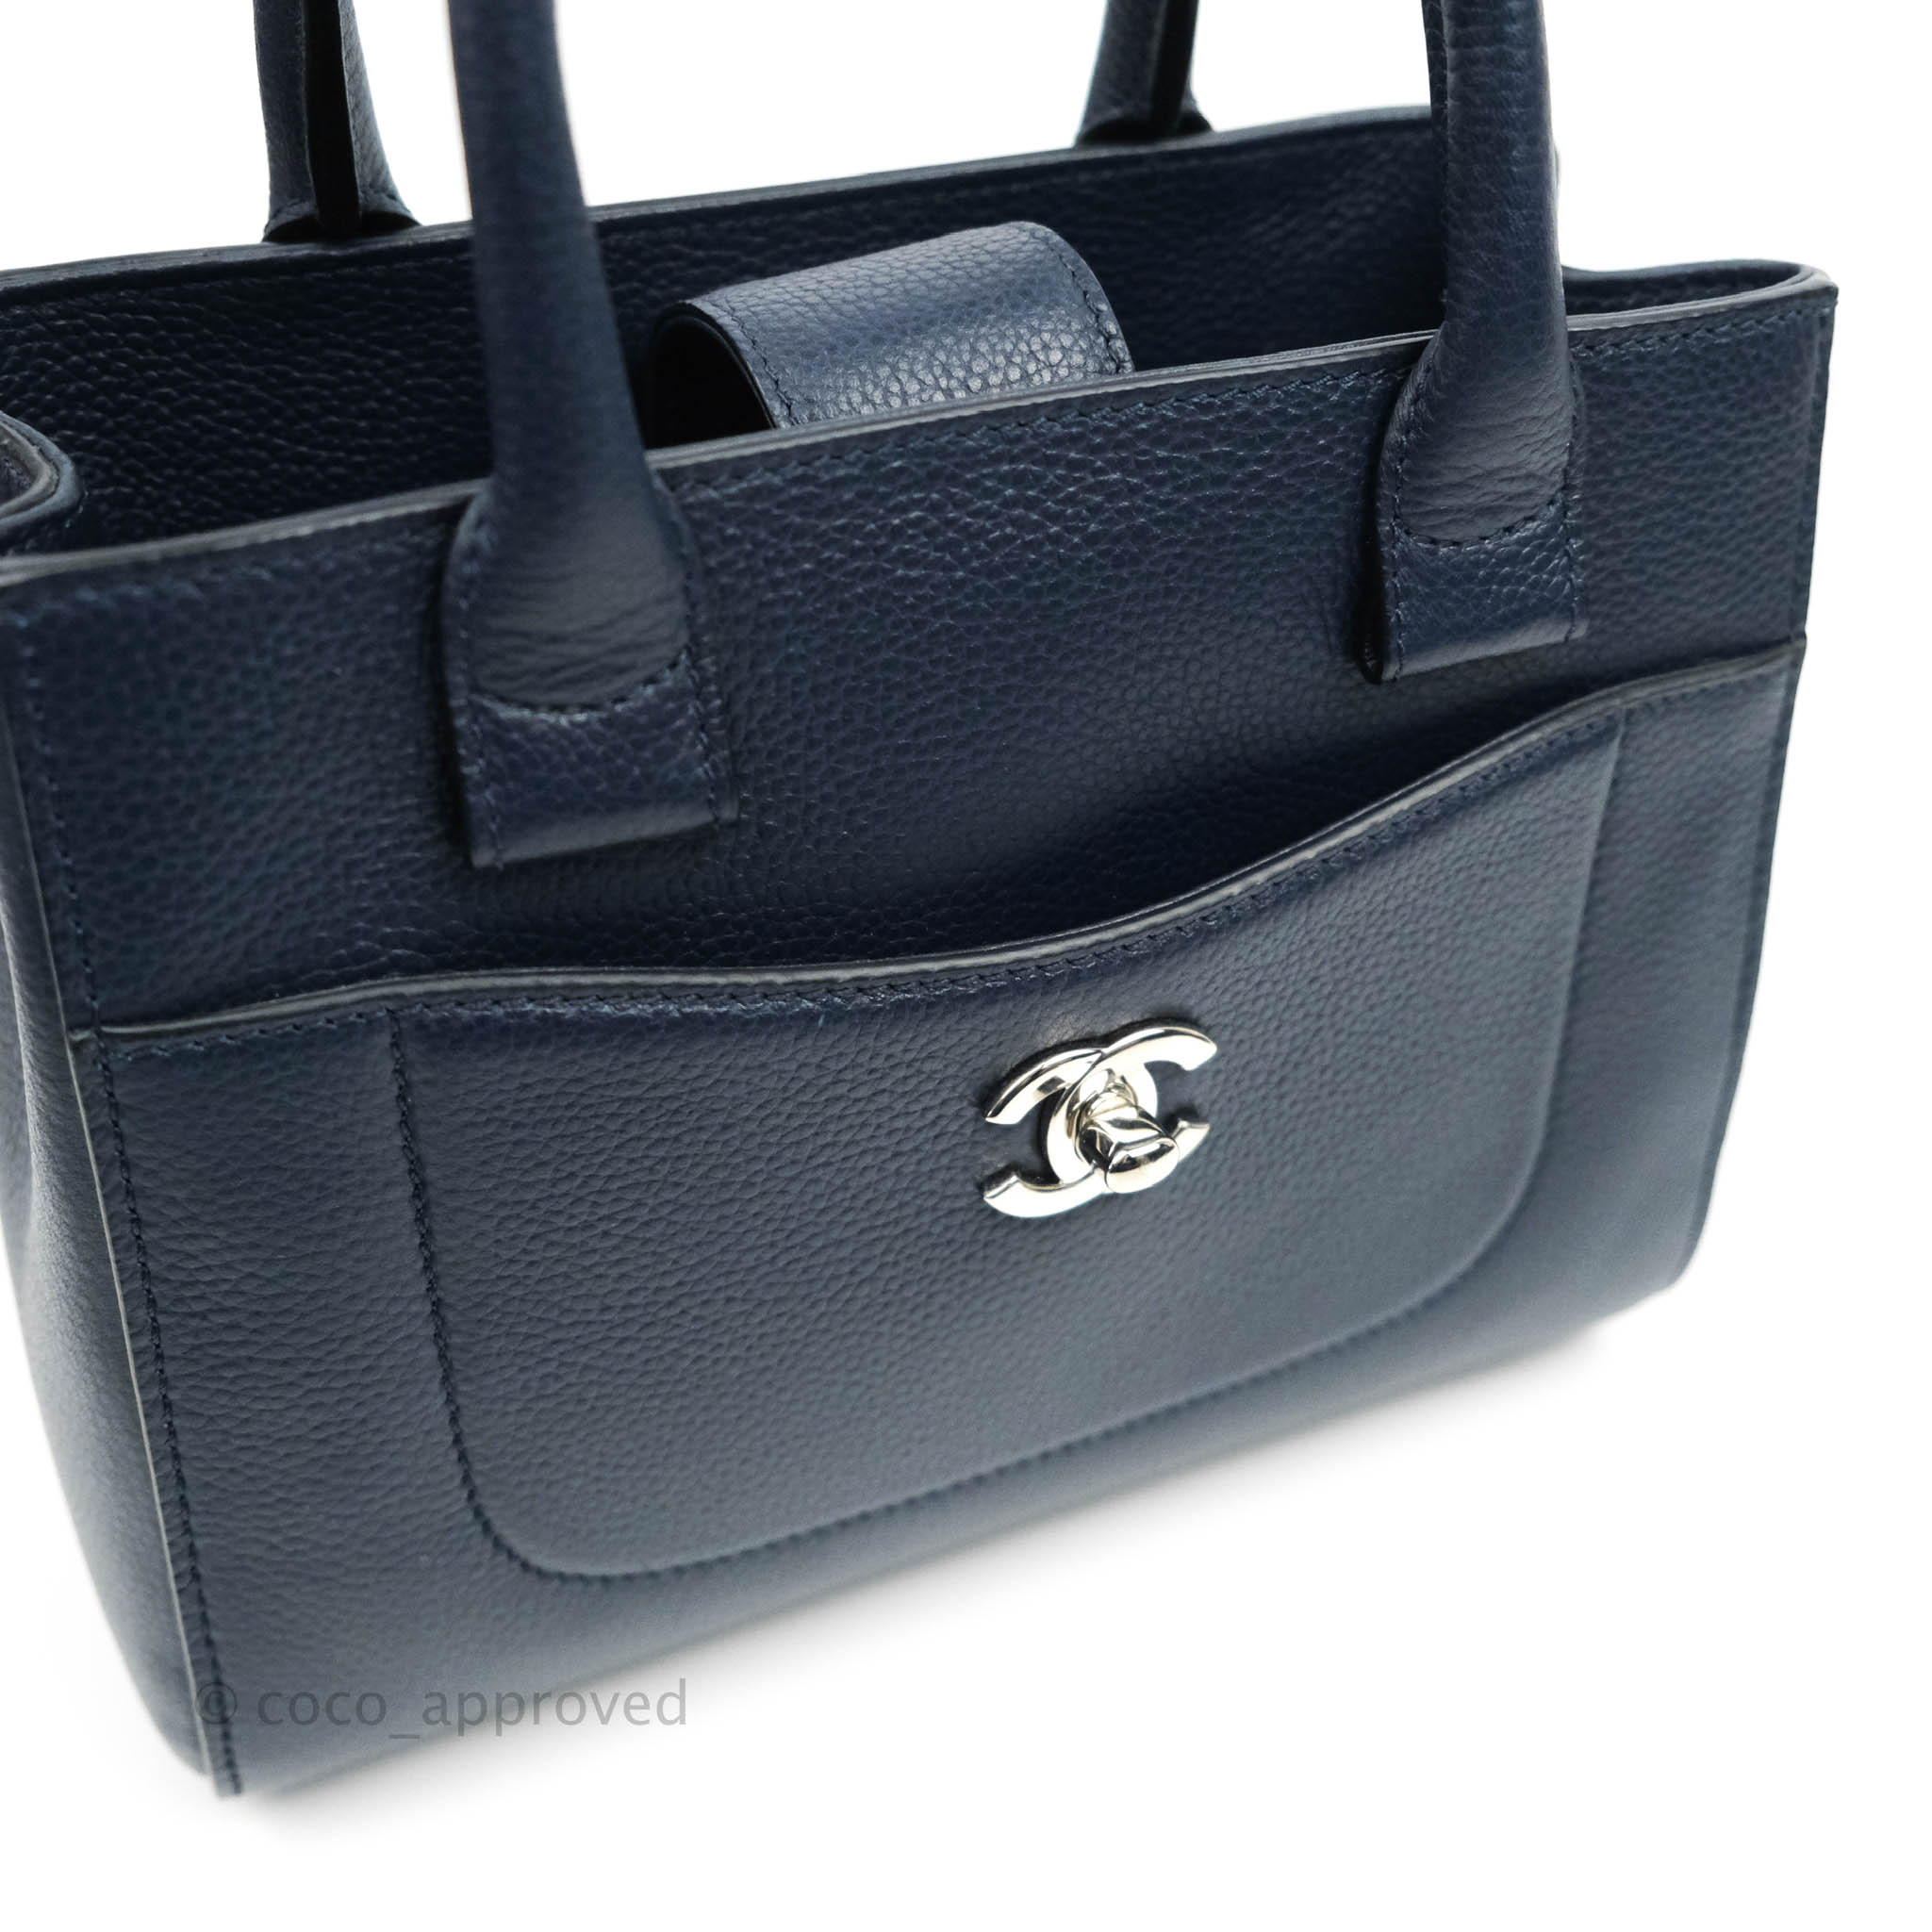 Chanel Shopping Handbag 365545